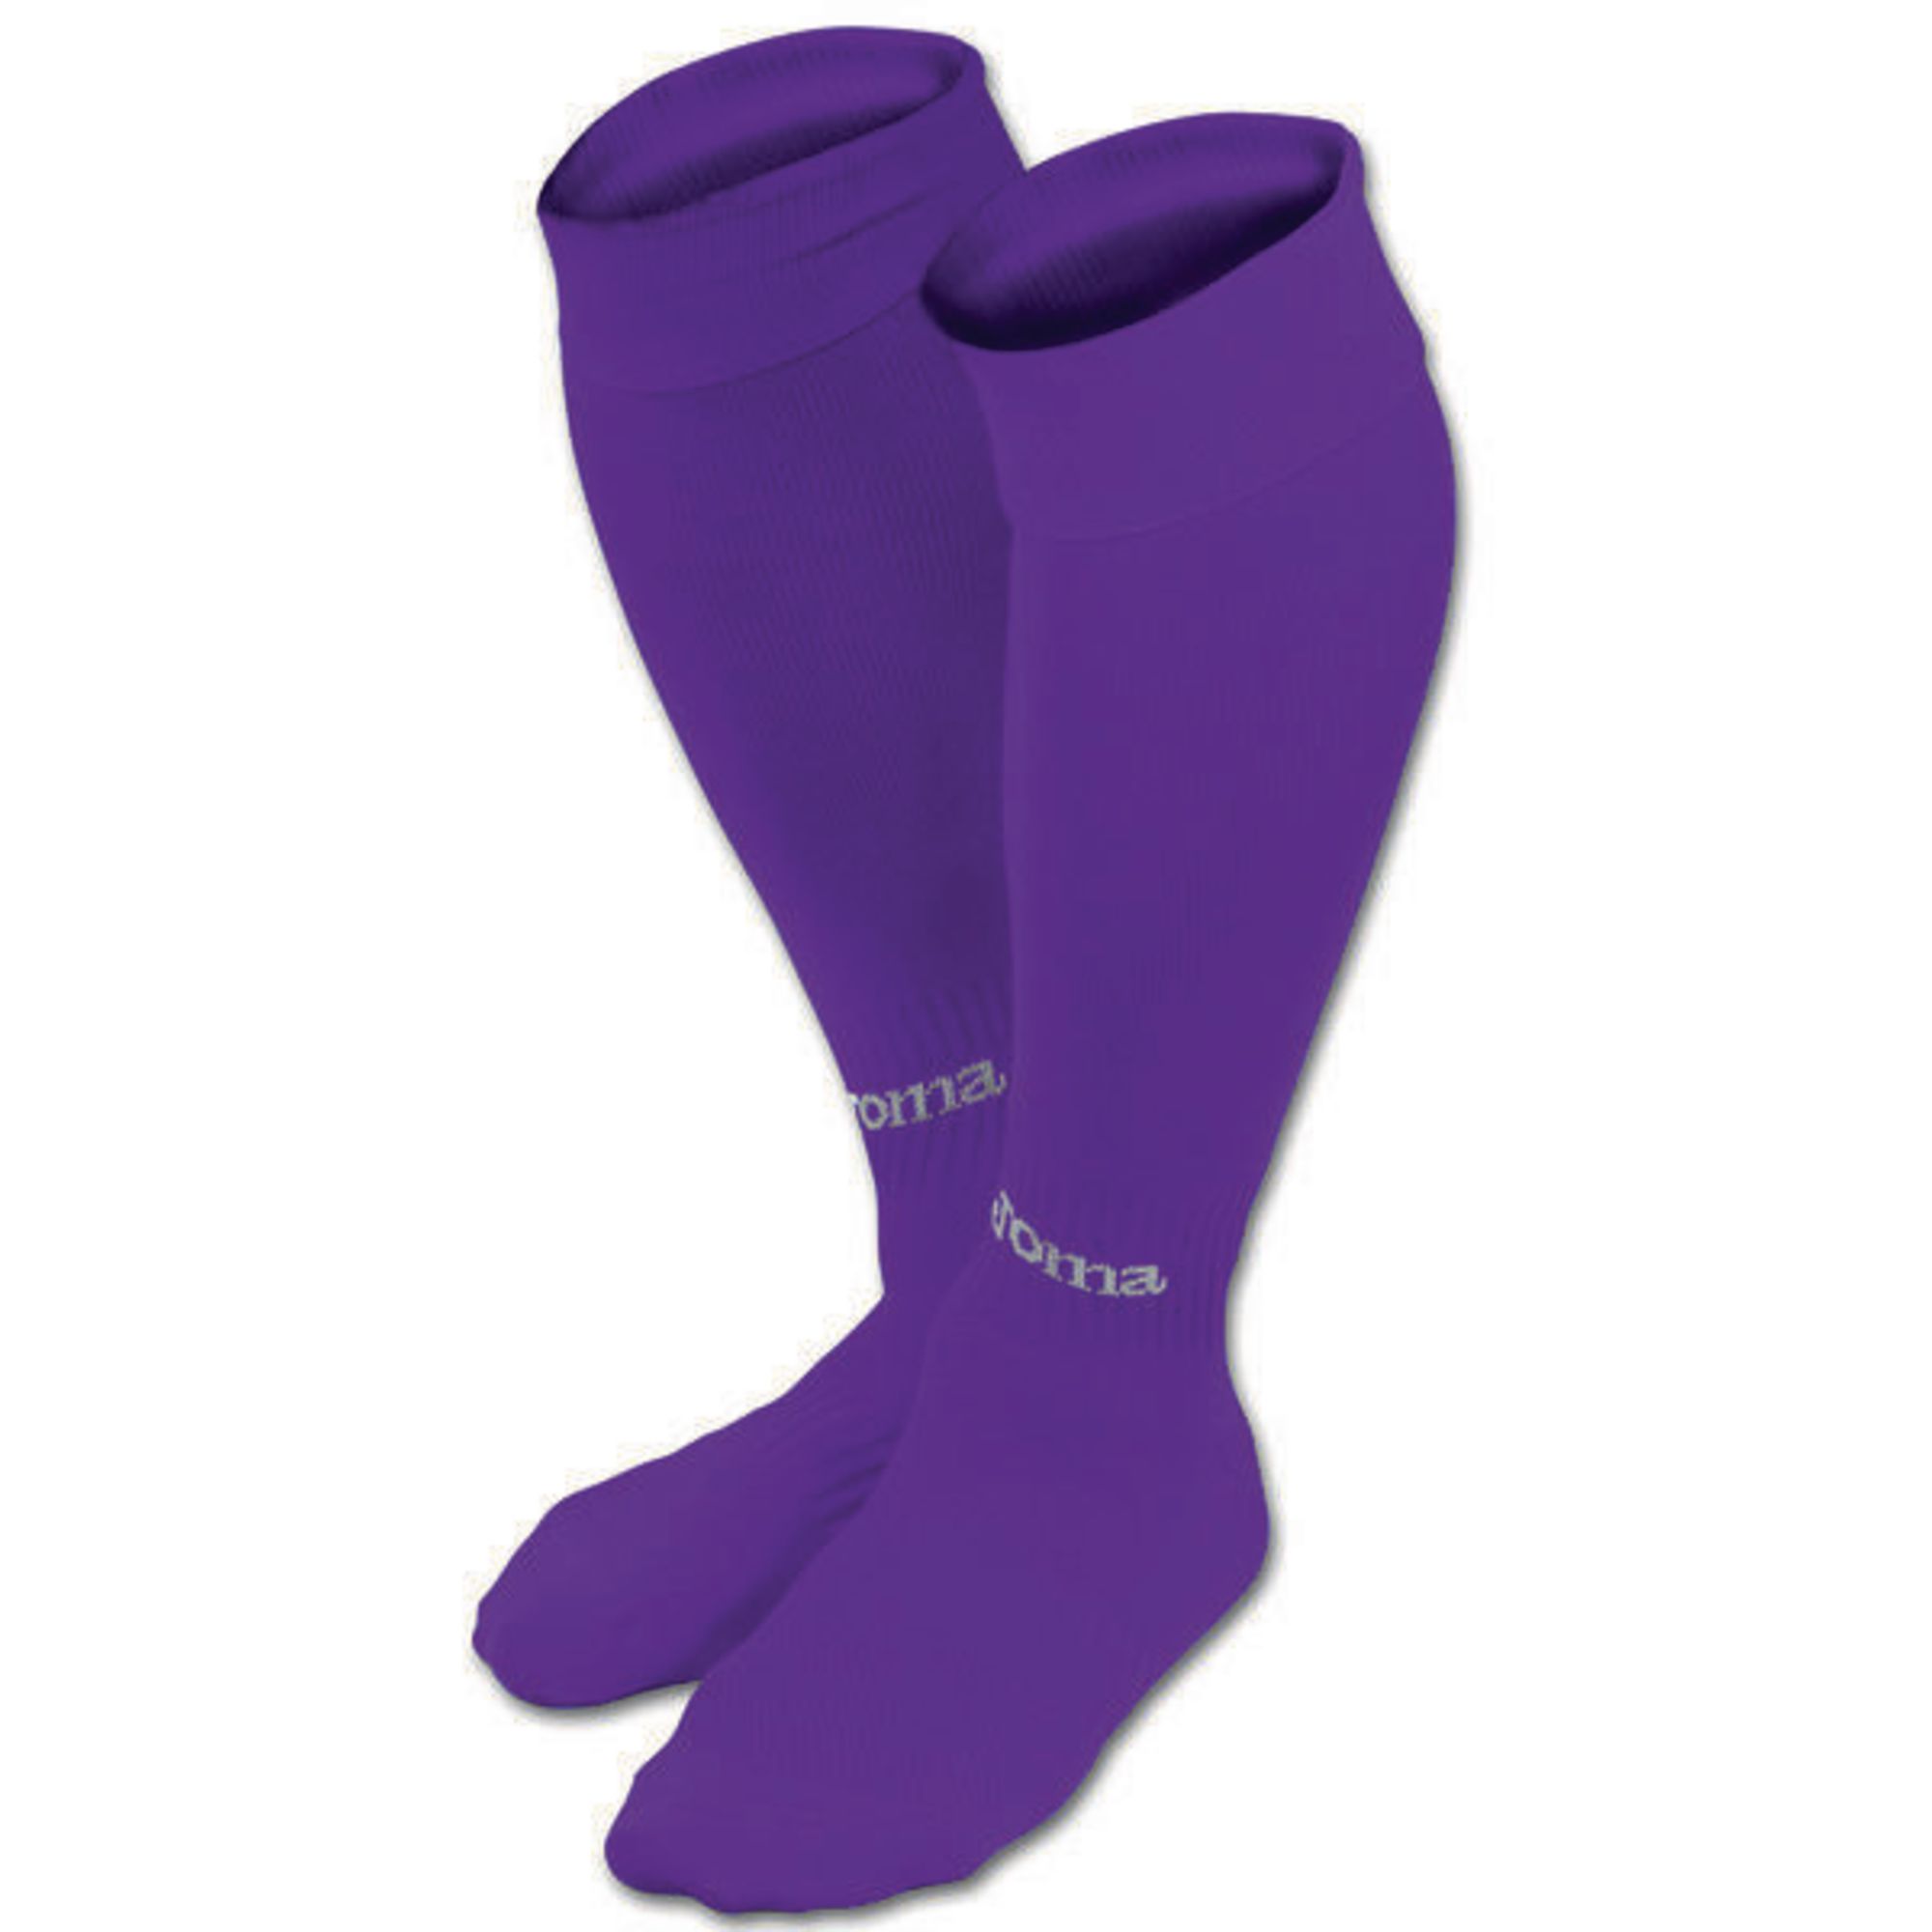 Joma Classic Socks Large 6-11 Vat Violet